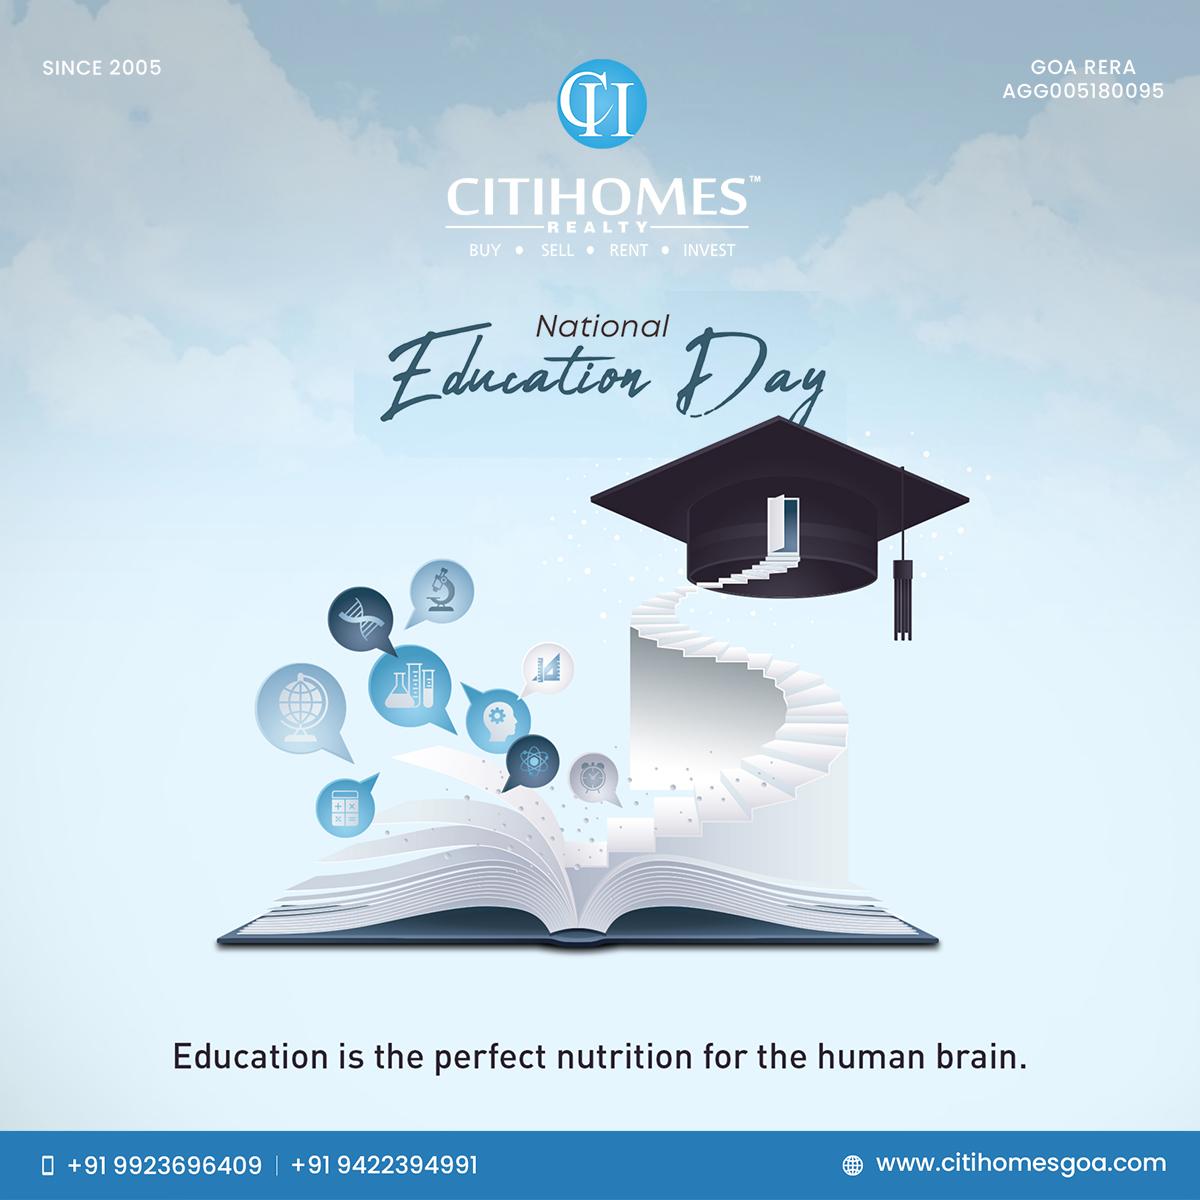 Citihomes wishes you 🙏🏻Happy National Education Day📚! Education is the key to unlock your dreams, open minds & transforms LIVES. 
#MaulanaAbulKalamAzad #birthanniversary #November11th #education #literateindia #firsteducationminister #citihomes #citihomesgoa #realestate #realtor